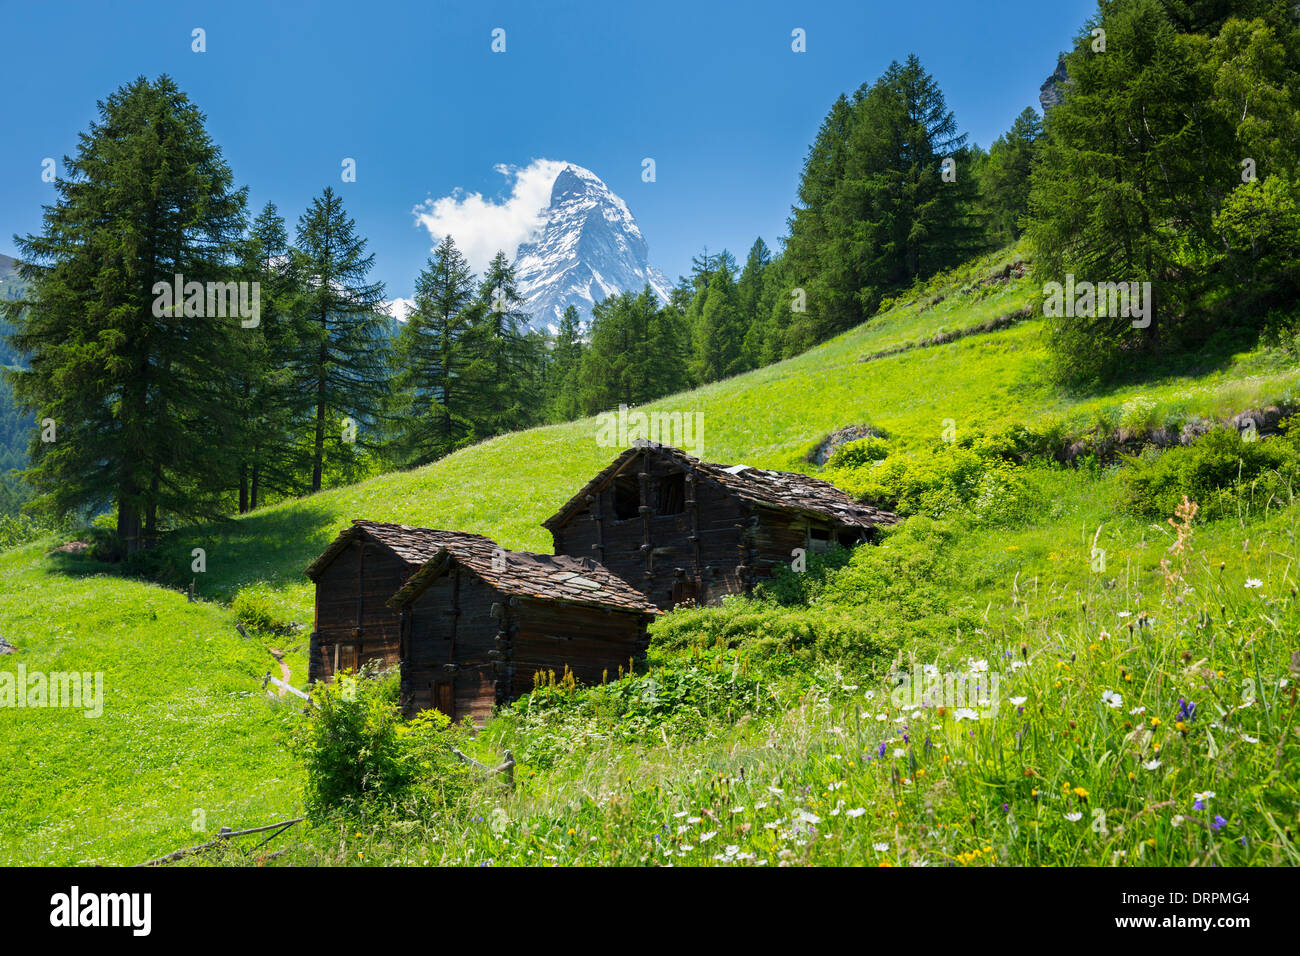 Chalet barns below the Matterhorn mountain in the Swiss Alps near Zermatt, Switzerland Stock Photo